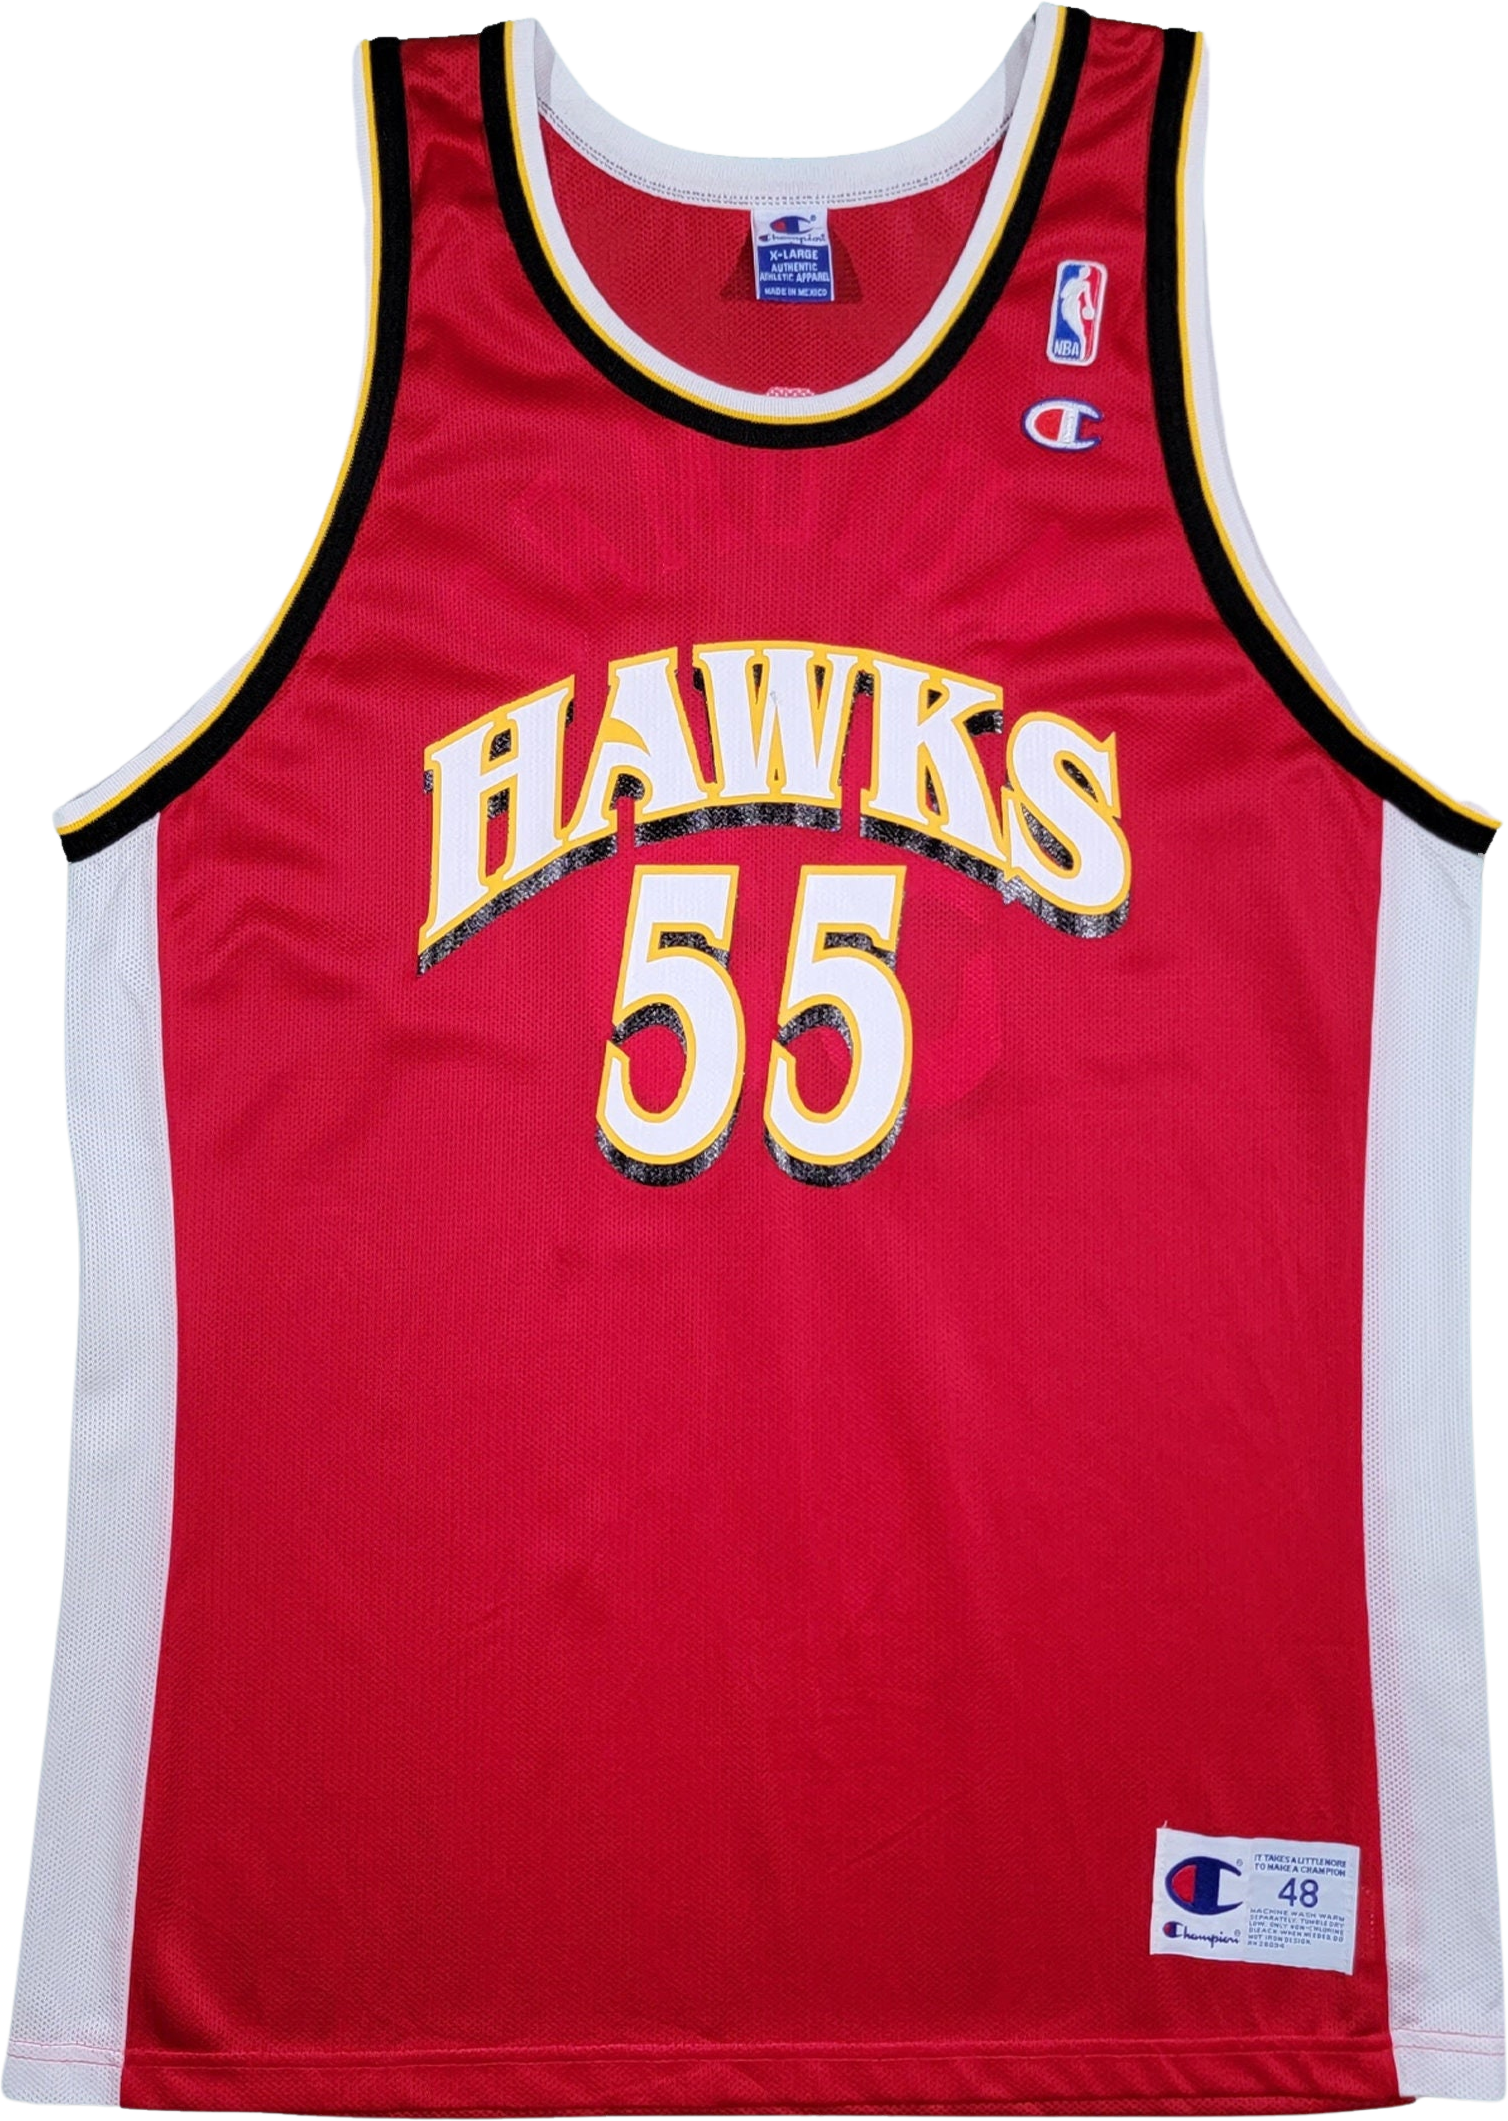 Champion Atlanta Hawks NBA Jerseys for sale